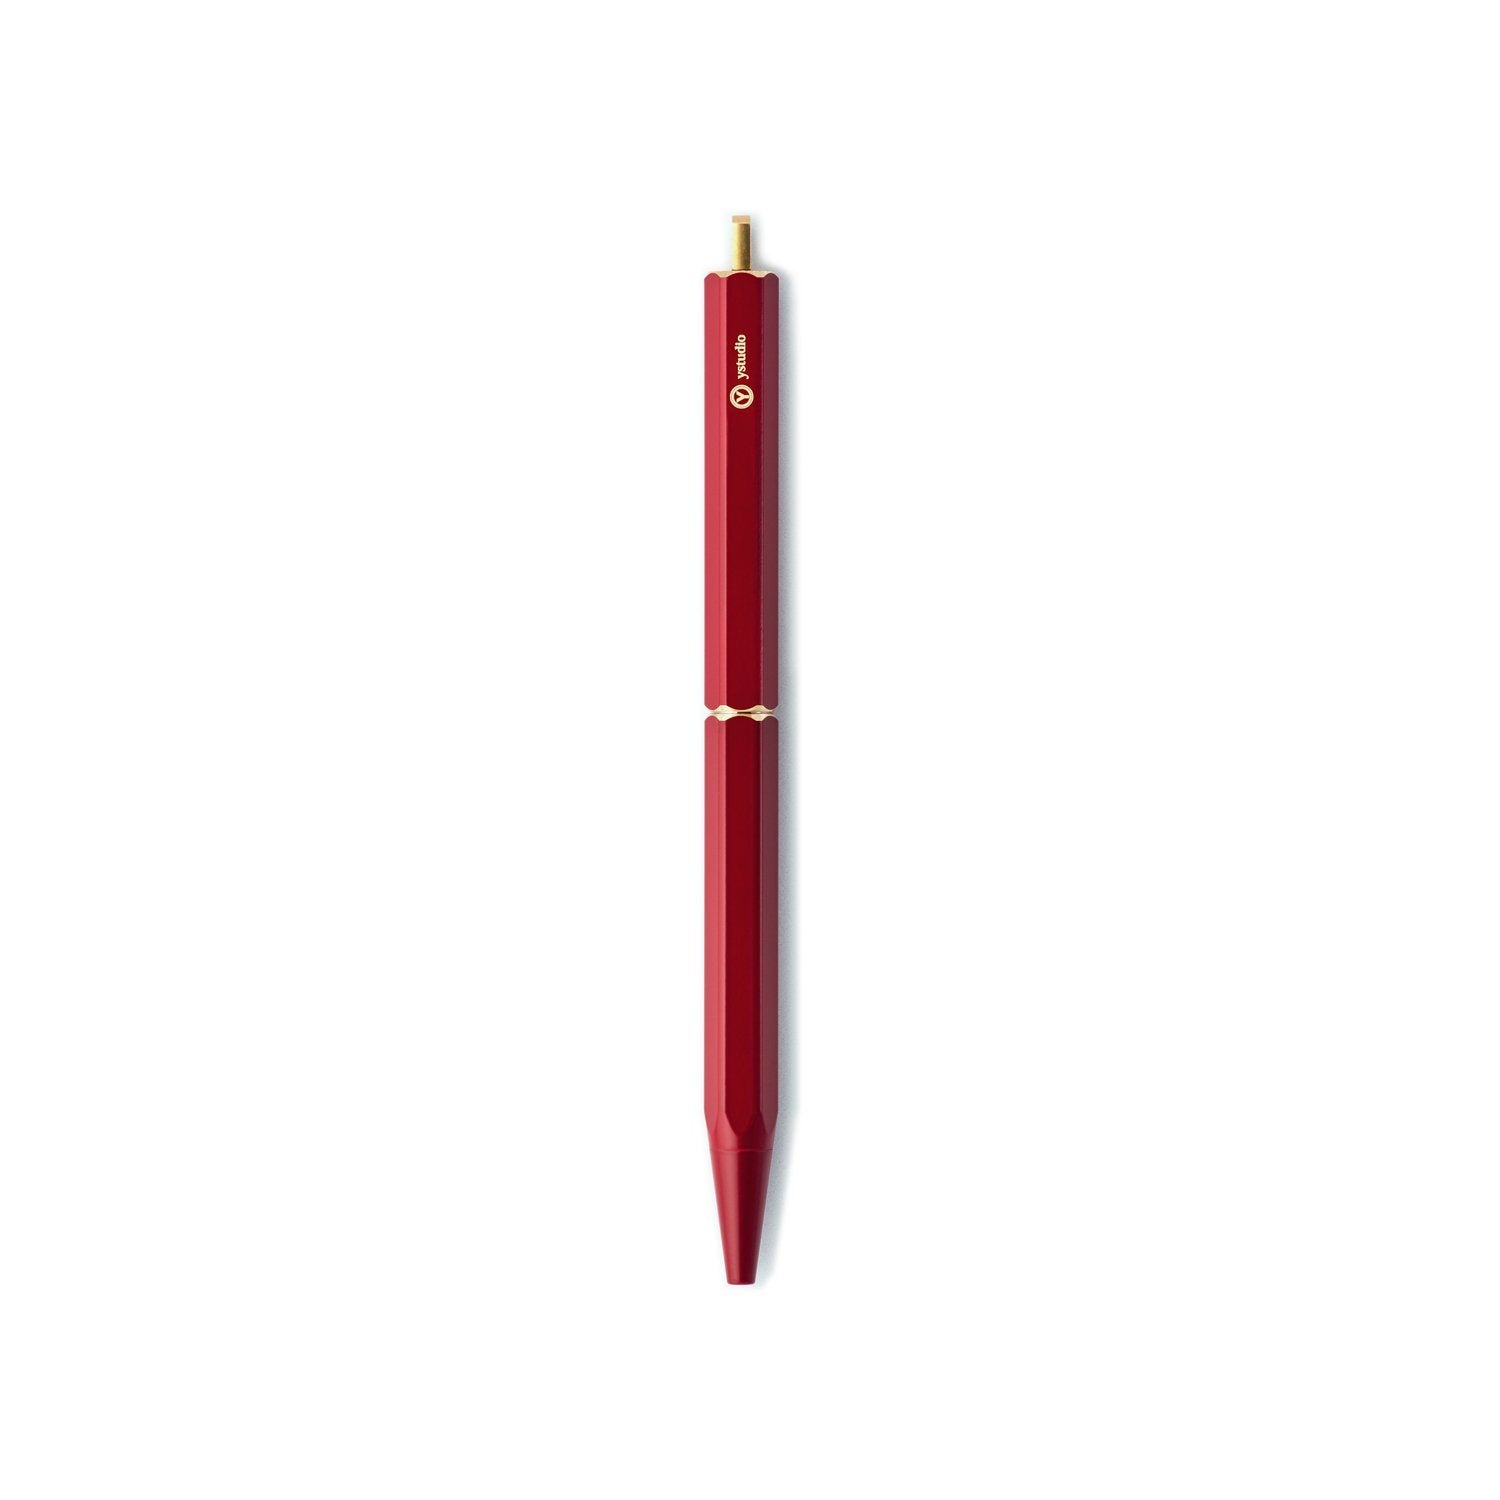 YSTUDIO - Classic Revolve Portable Ballpoint Pen (Red)